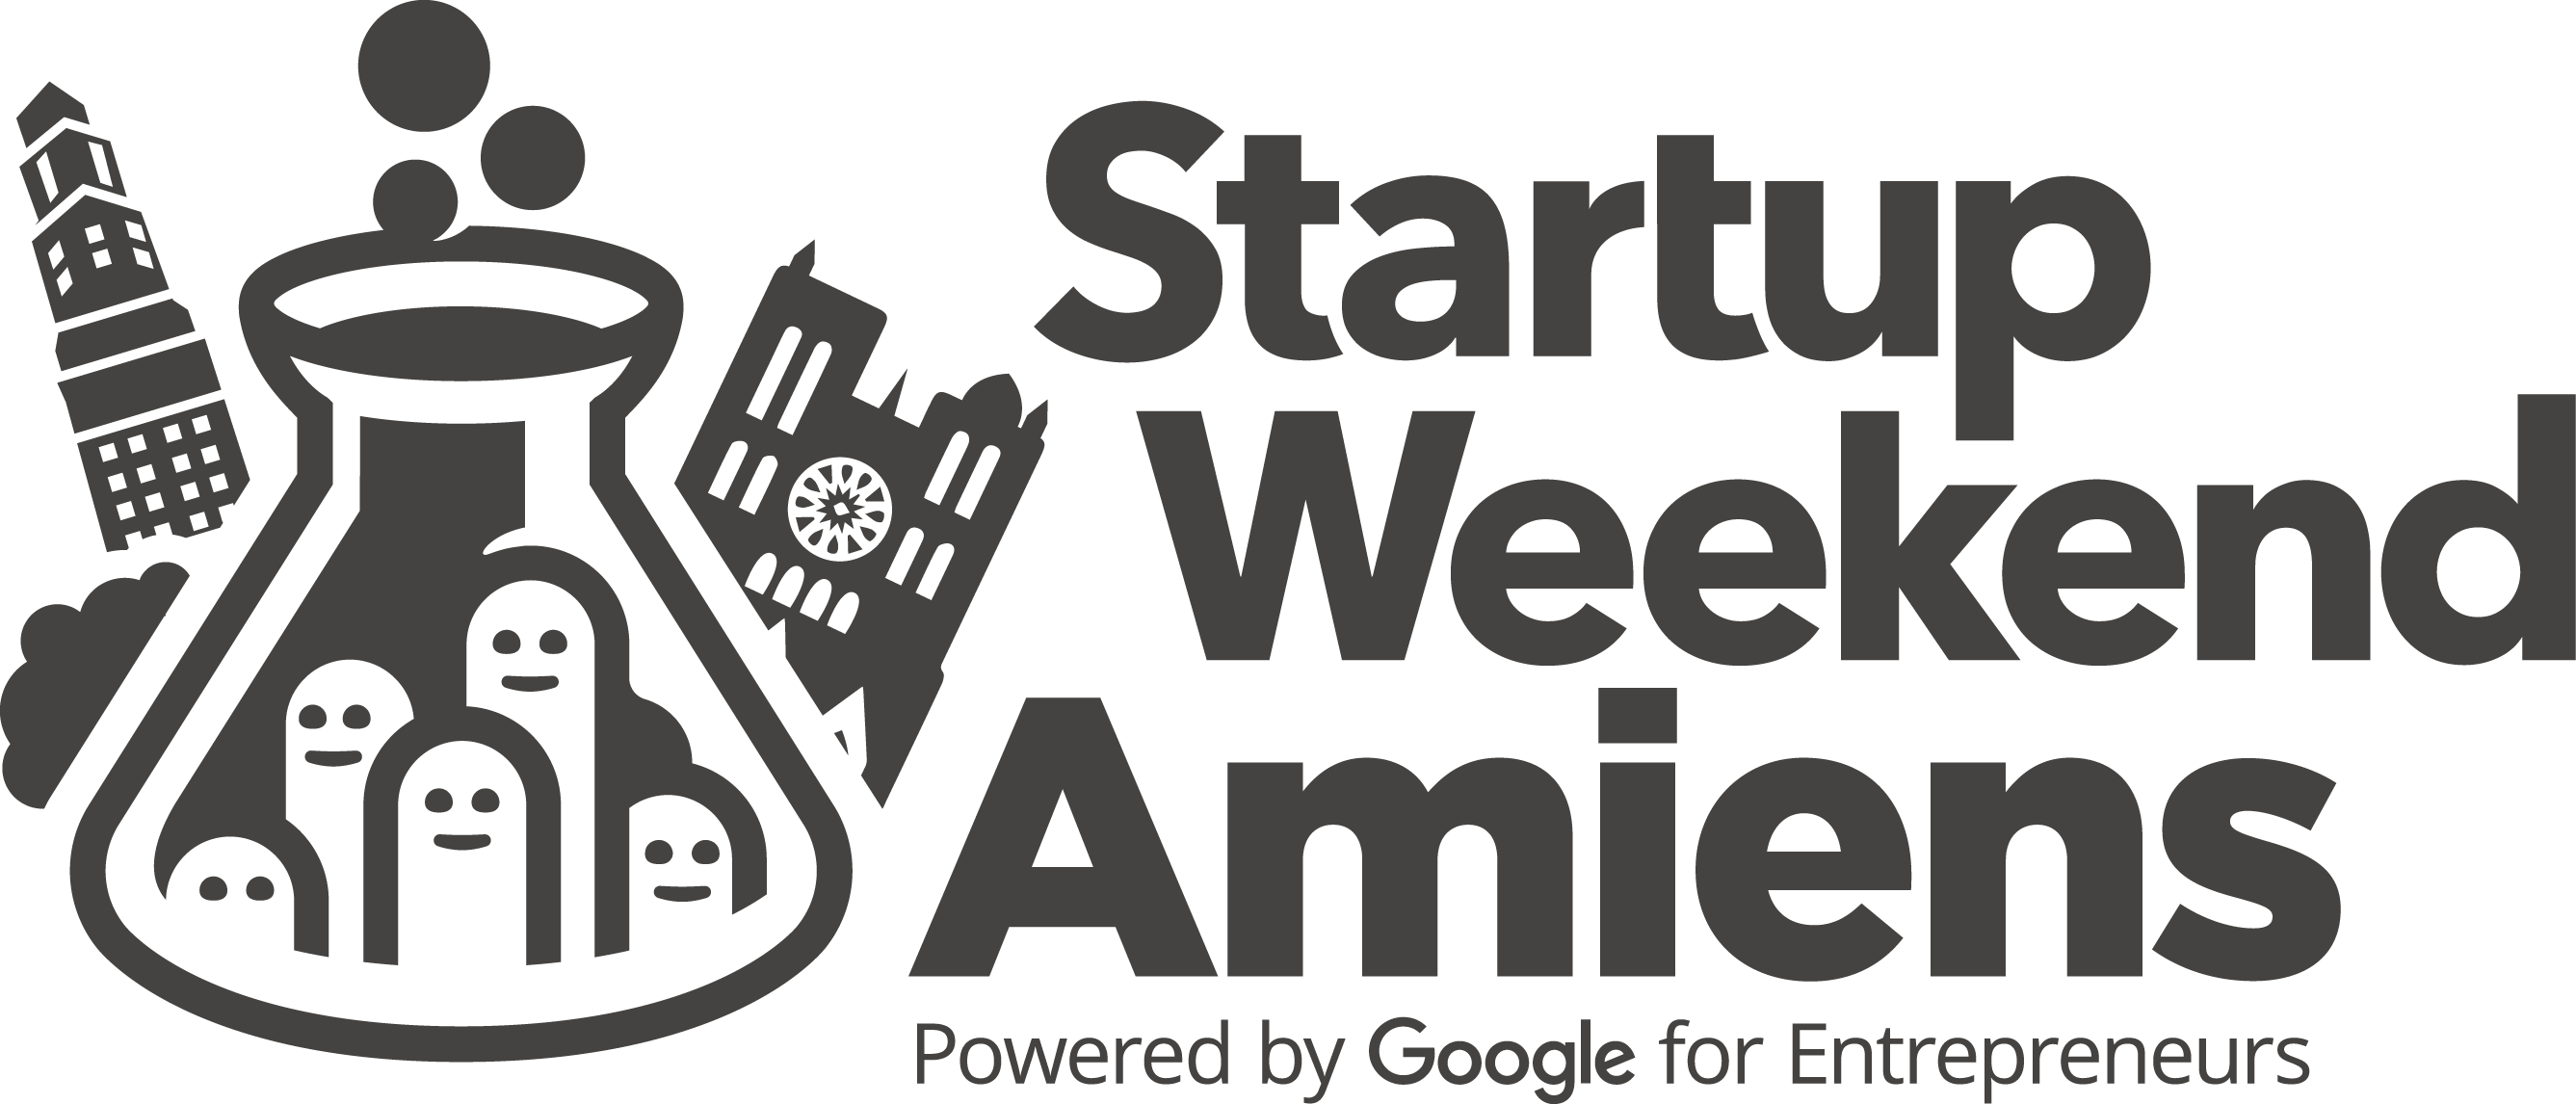 ​Amiens Startup Weekend: making space to meet